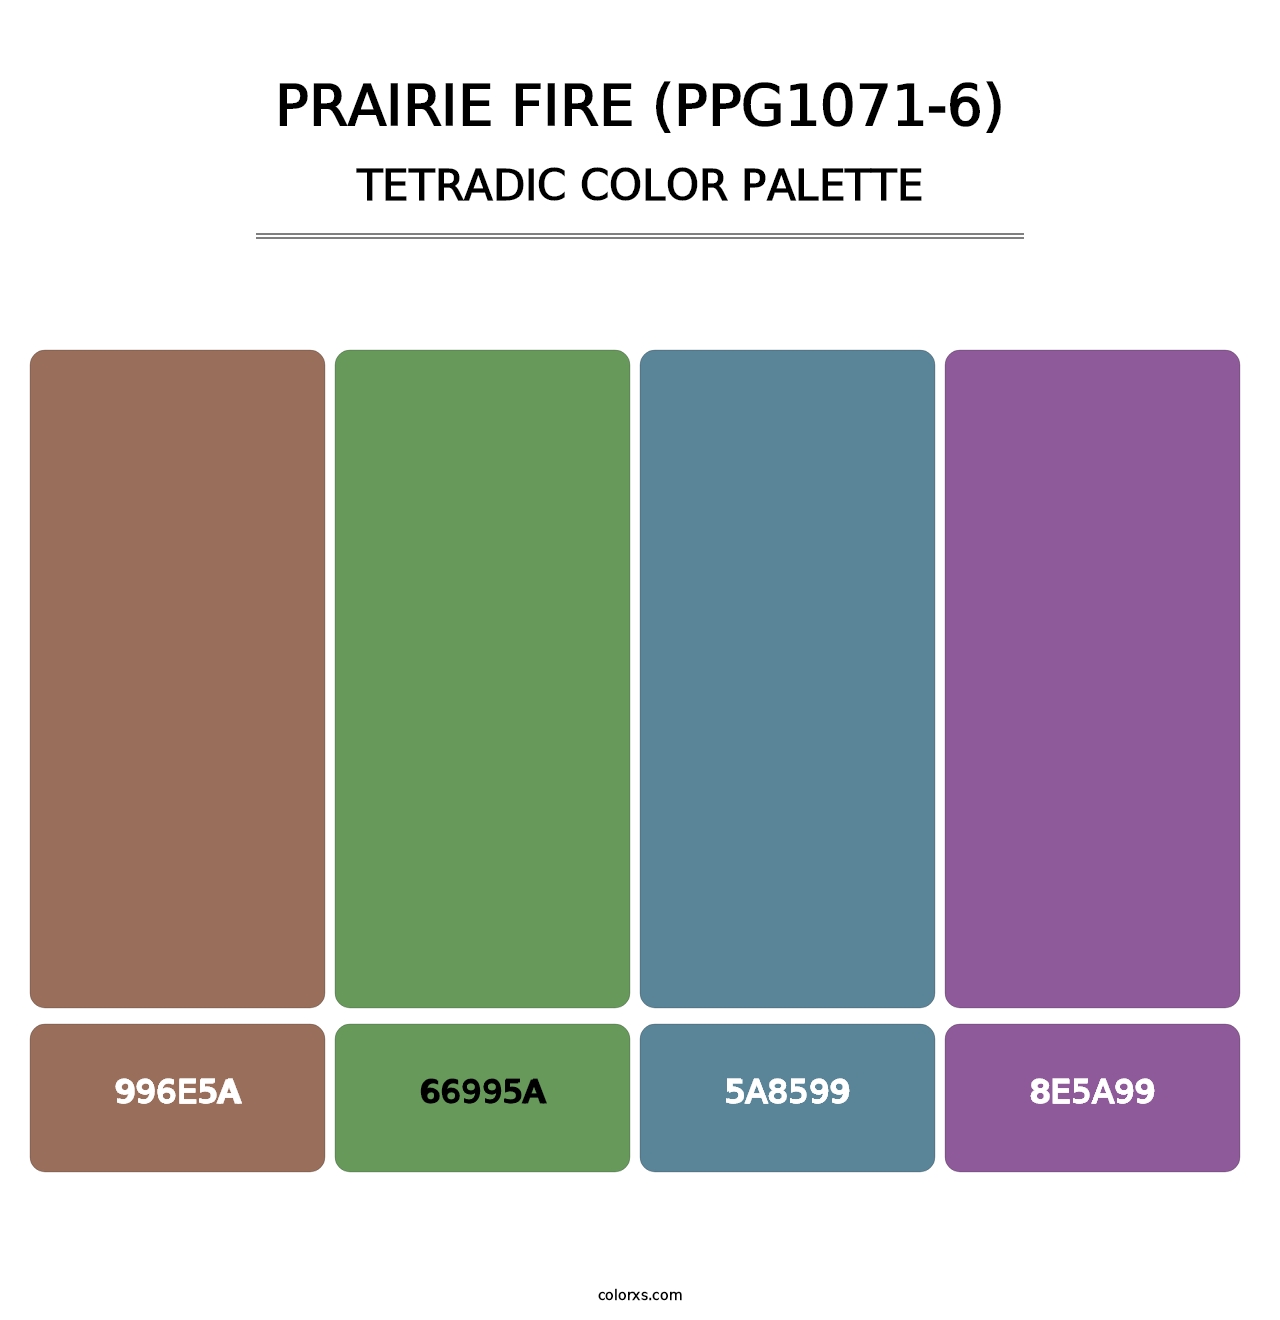 Prairie Fire (PPG1071-6) - Tetradic Color Palette